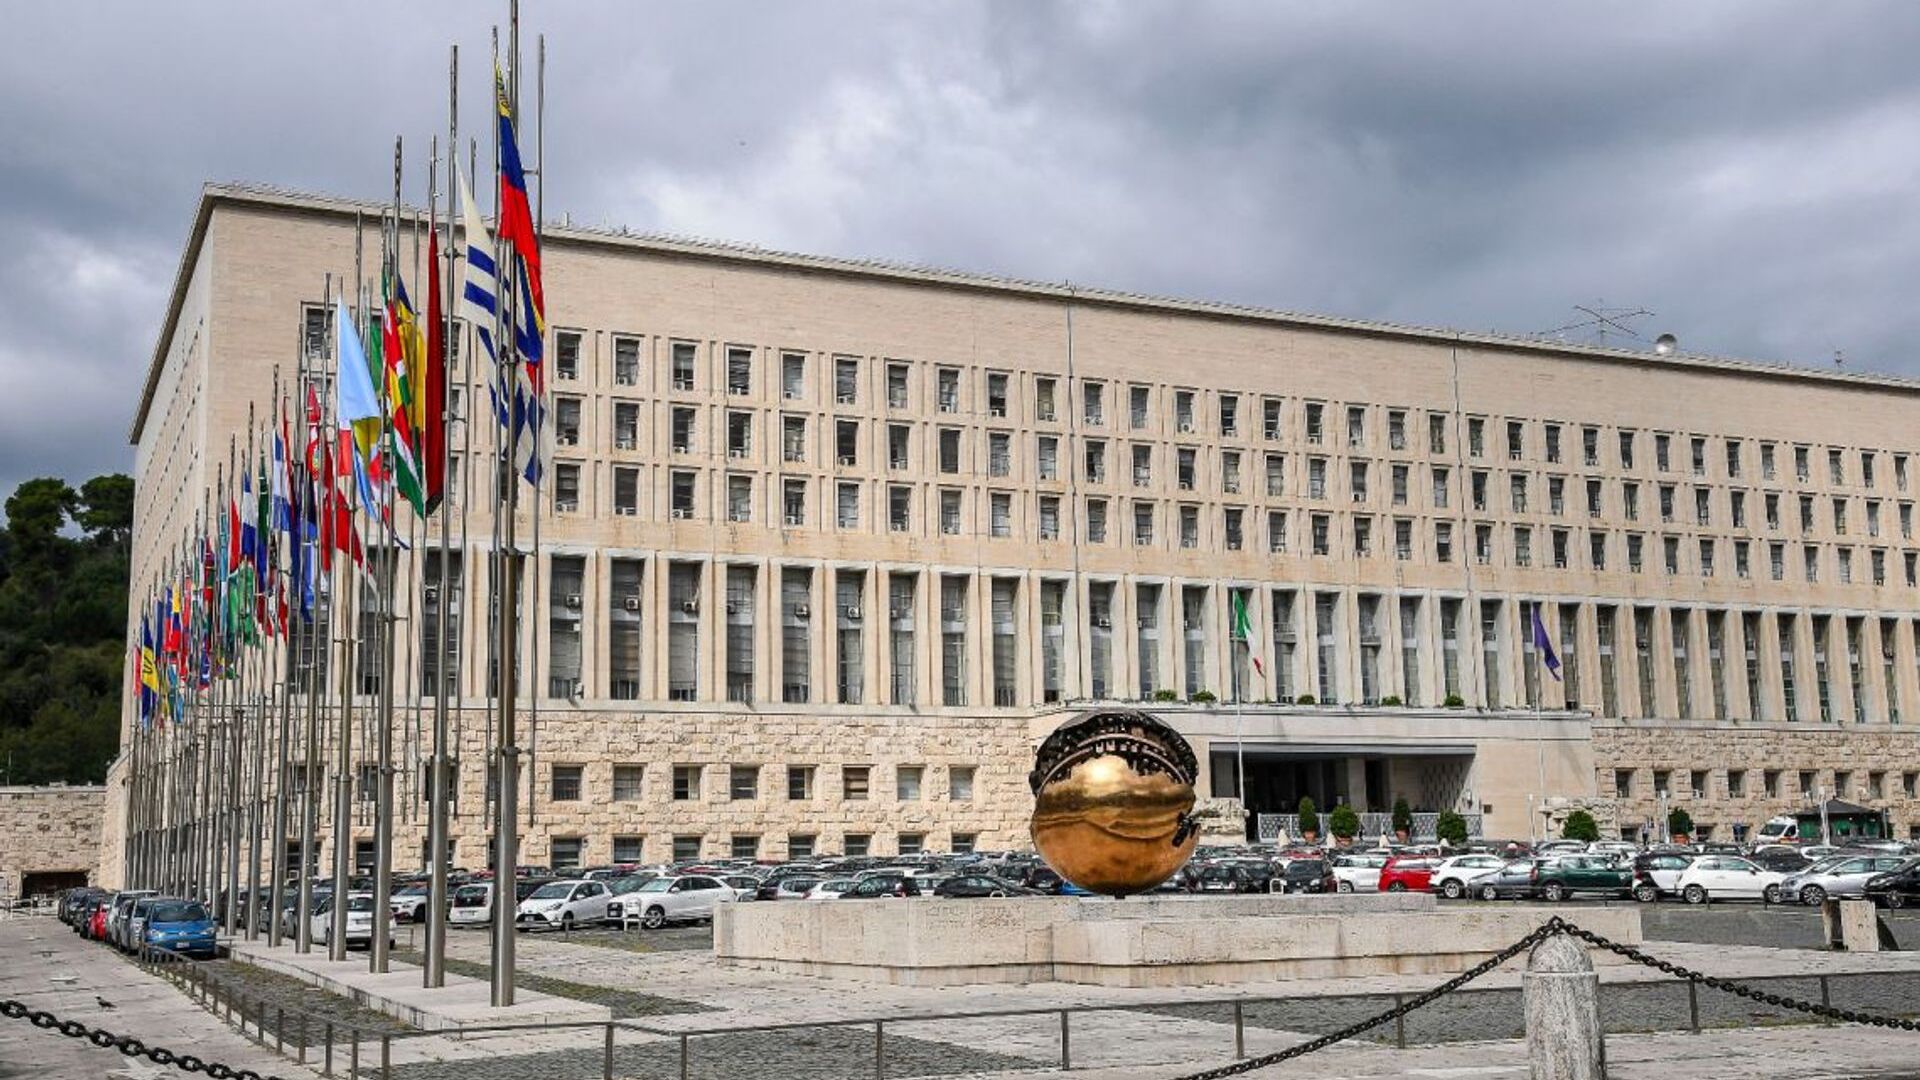 Palazzo della Farnesina میزبان وزارت امور خارجه و همکاری های بین المللی در رم است